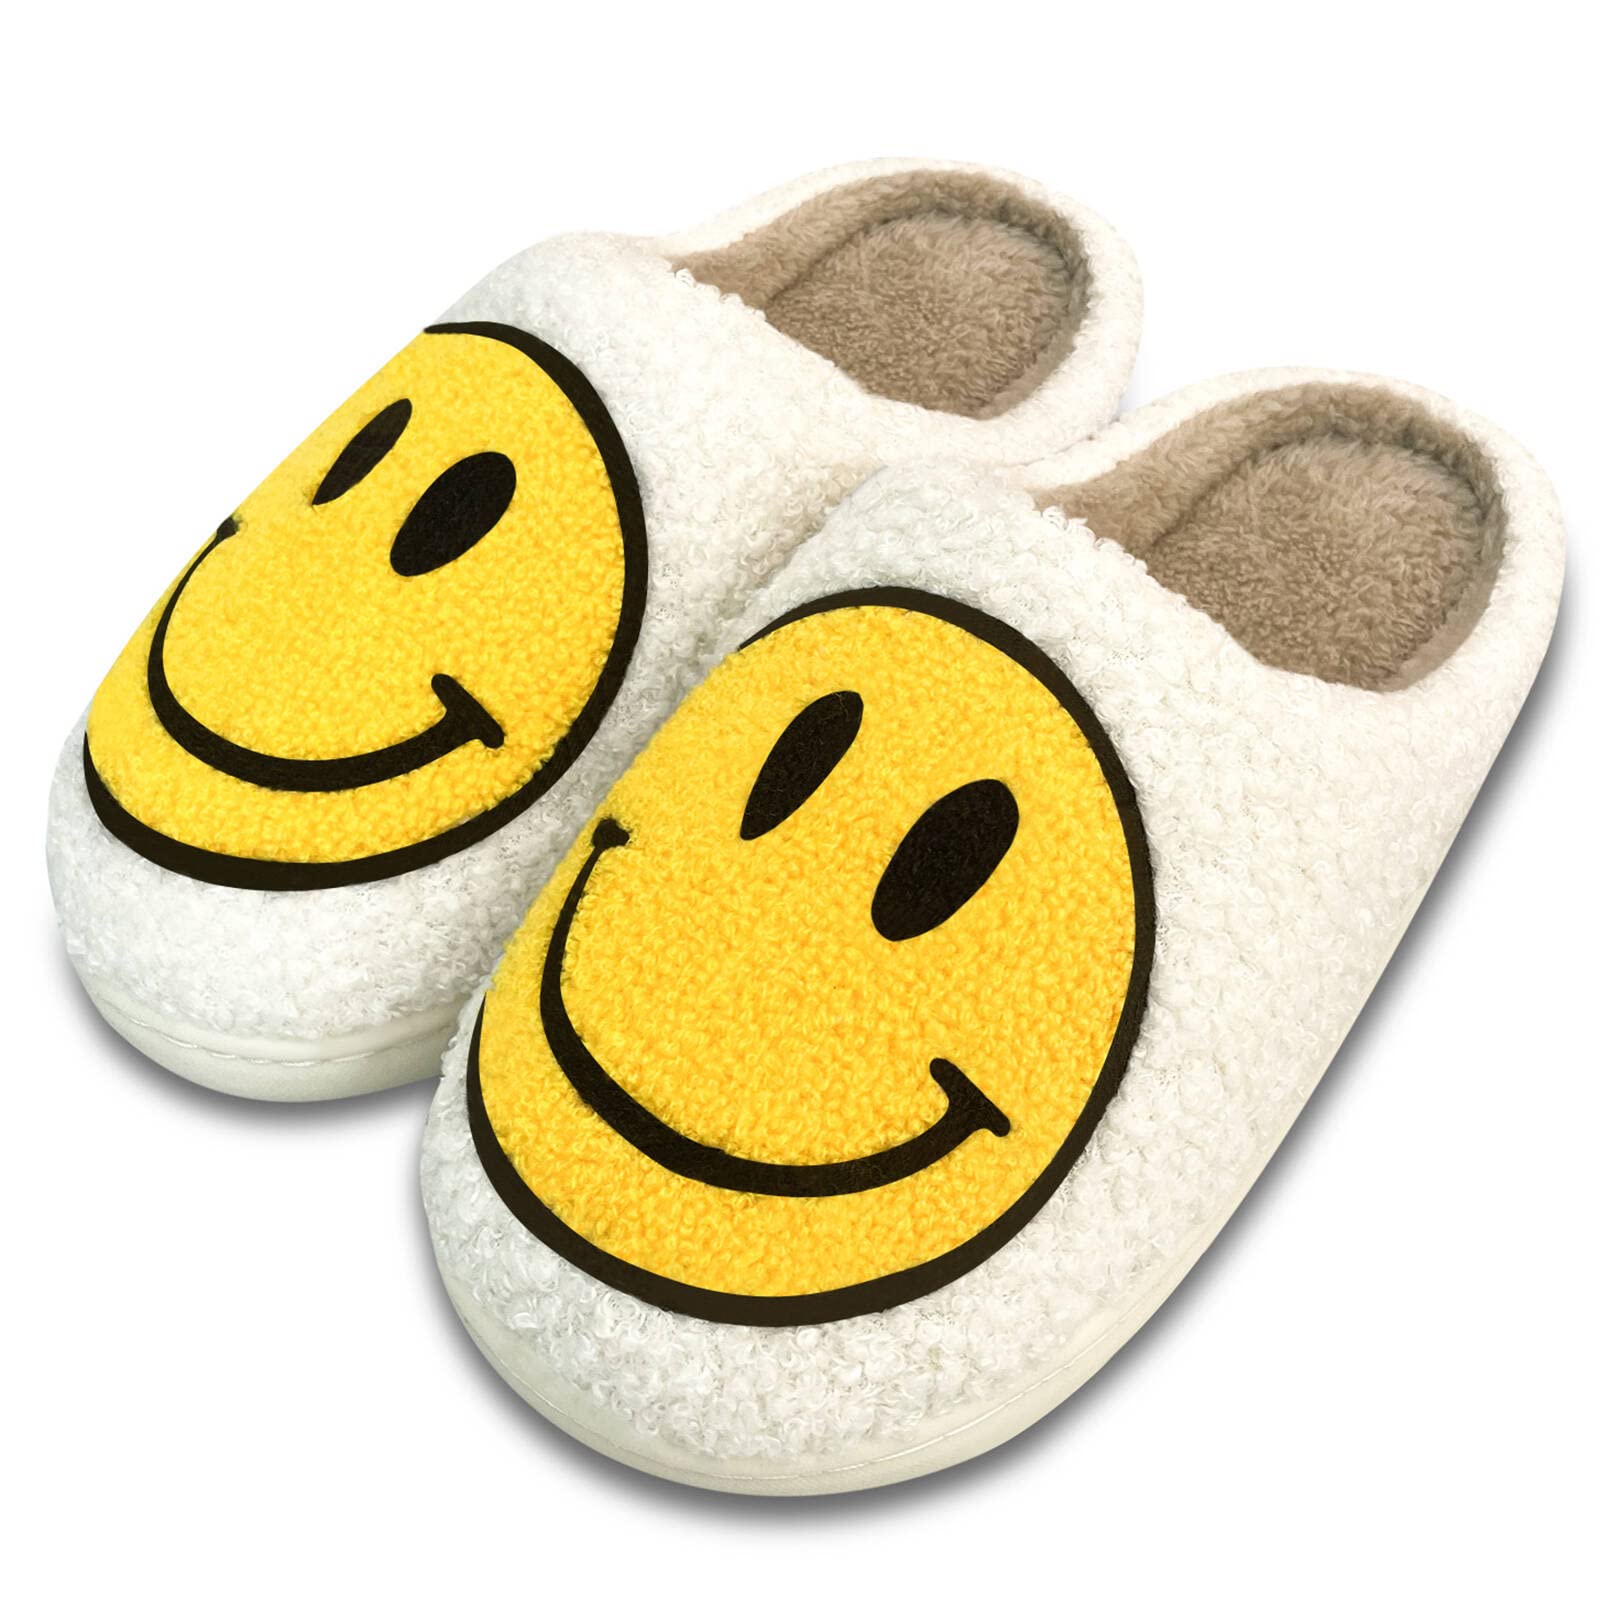 YJJY Smile Face Slippers,Retro Soft Plush Lightweight House Slippers Slip-on Cozy Indoor Outdoor Slippers,Slip on Anti-Skid Sole